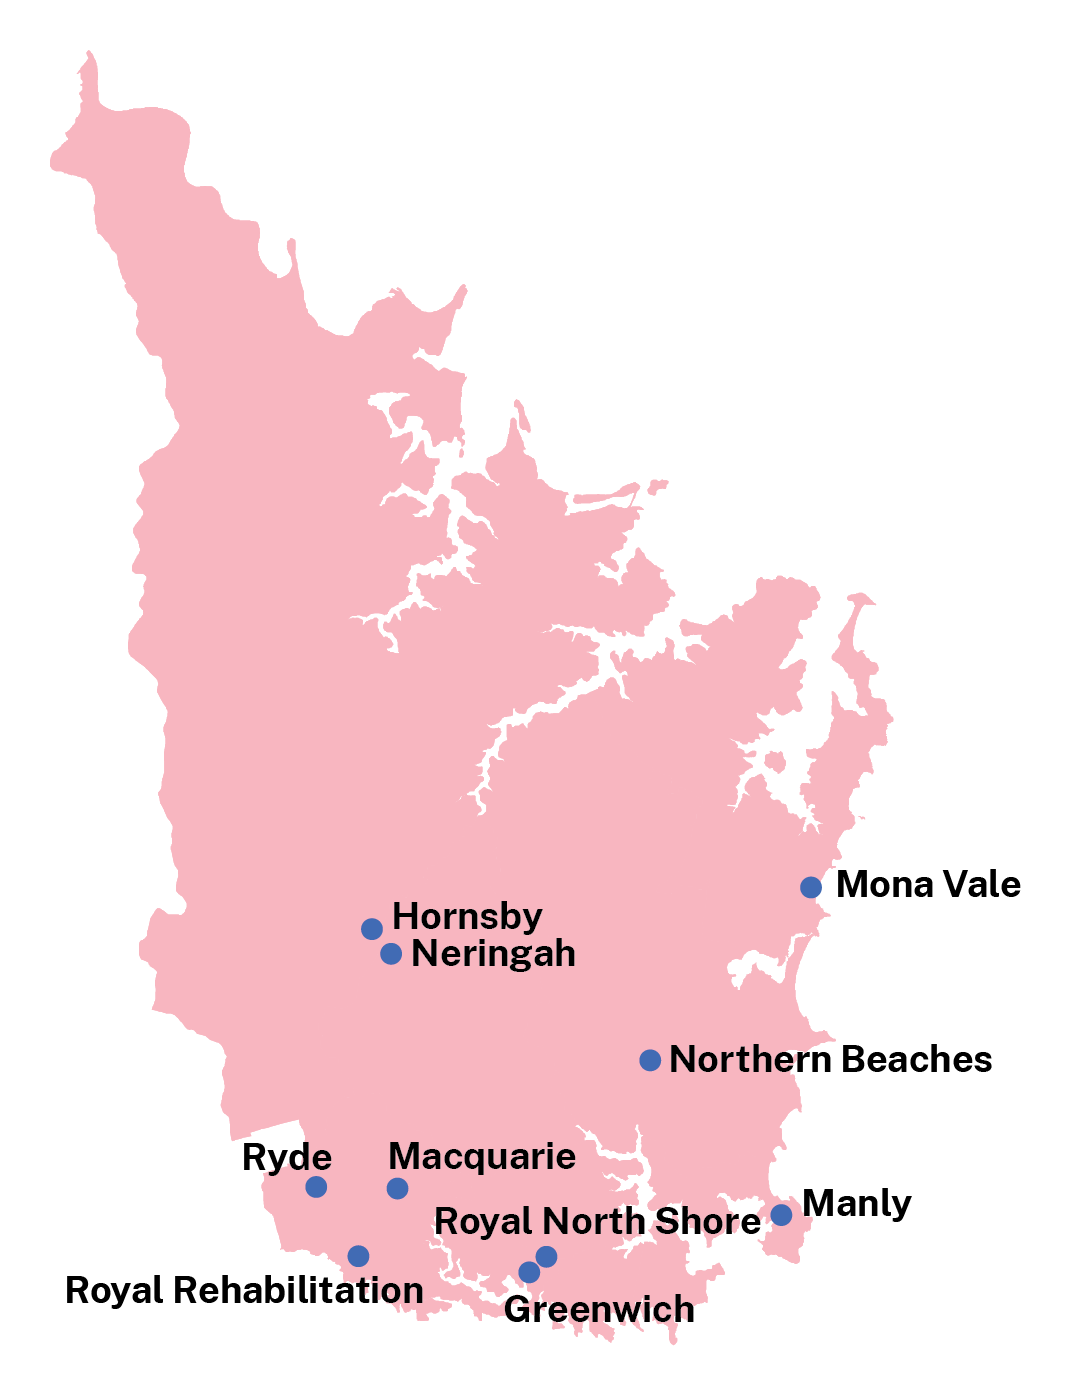 Northern Sydney Local Health District